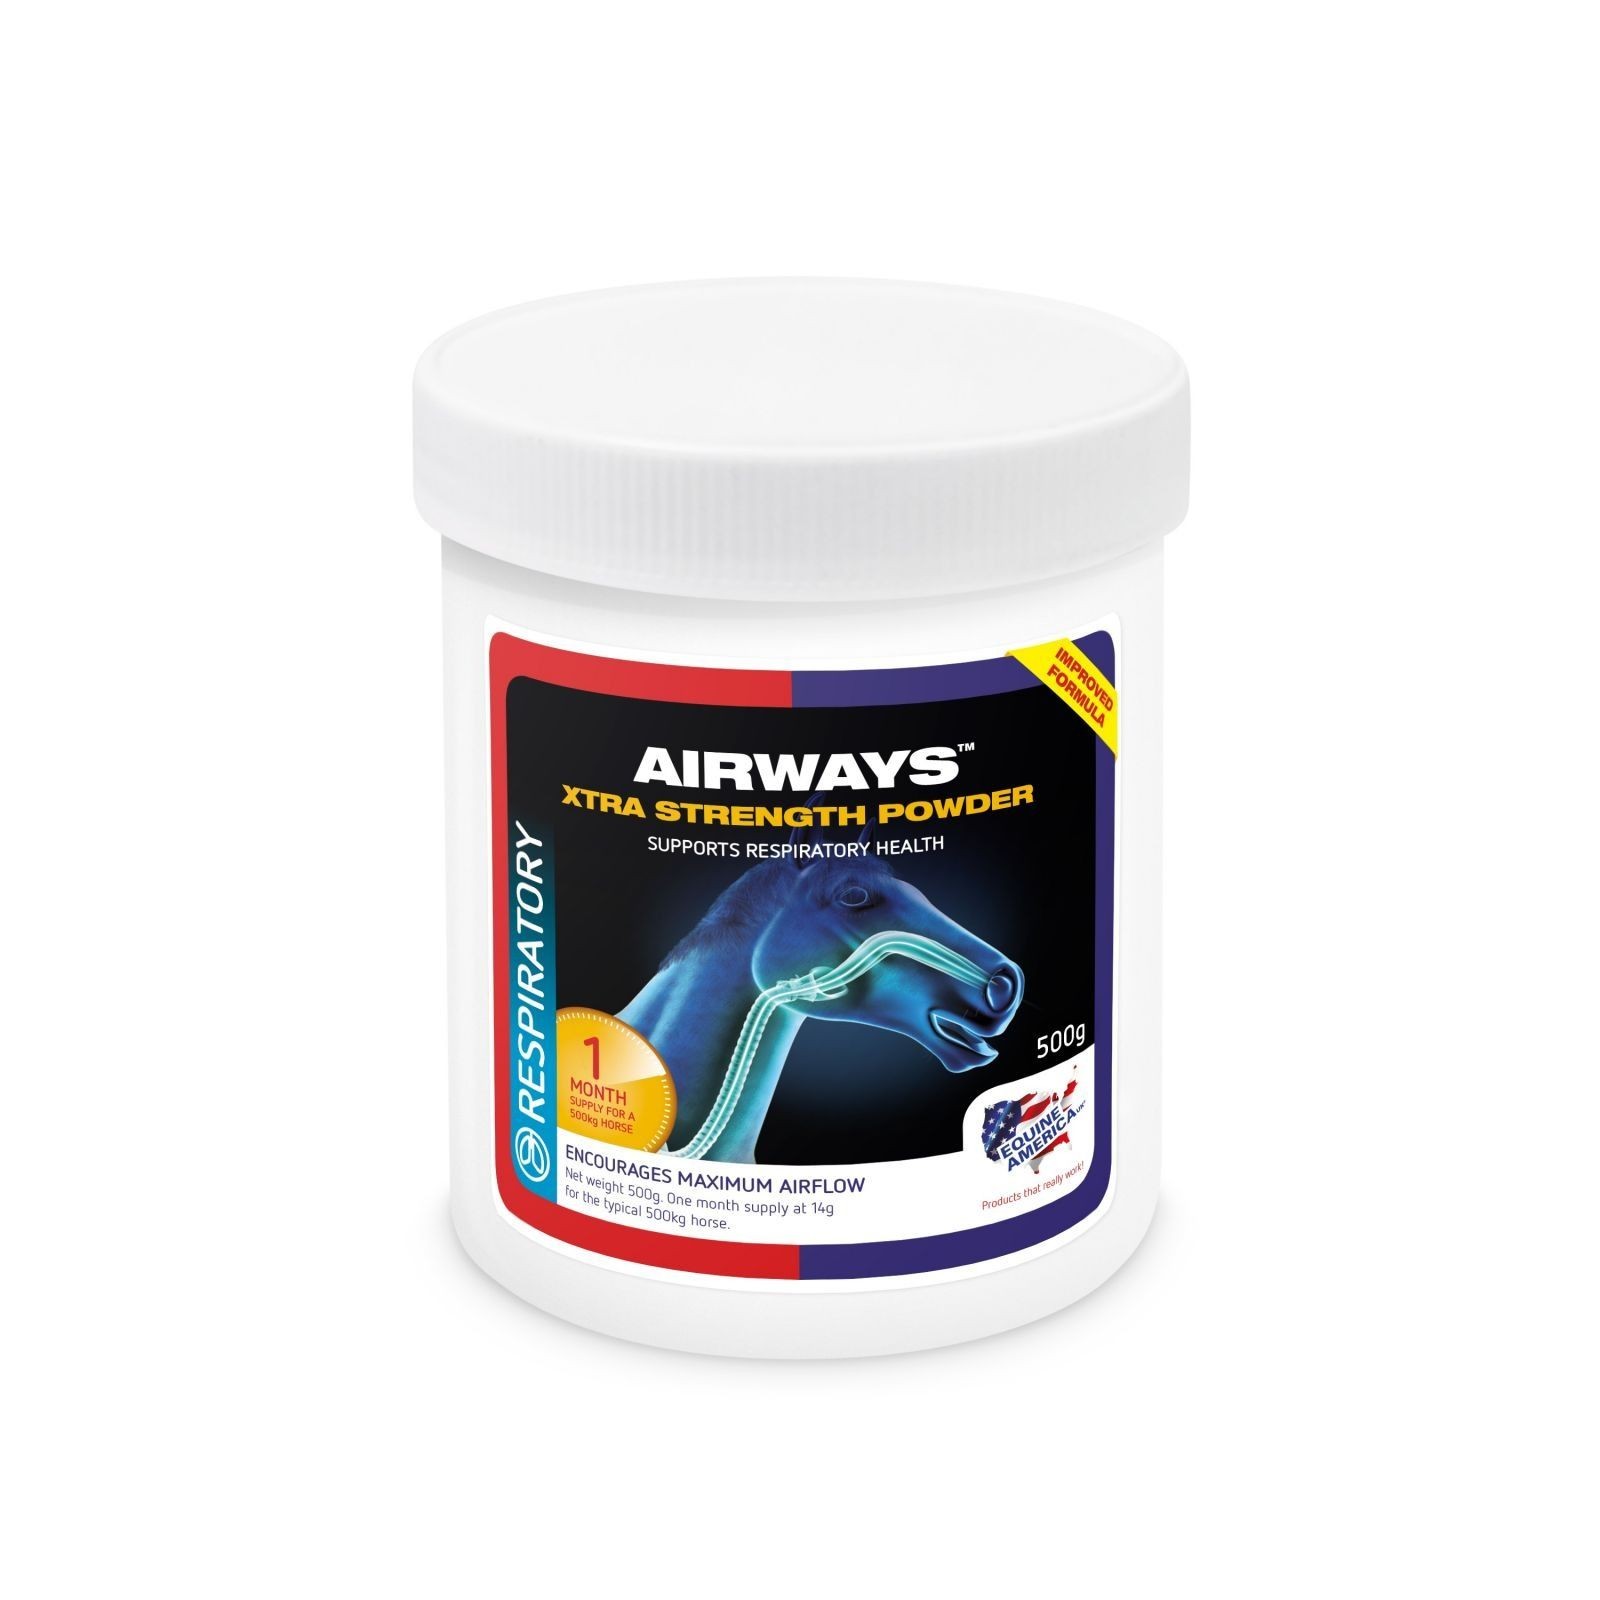 Airways Xtra Strength Powder